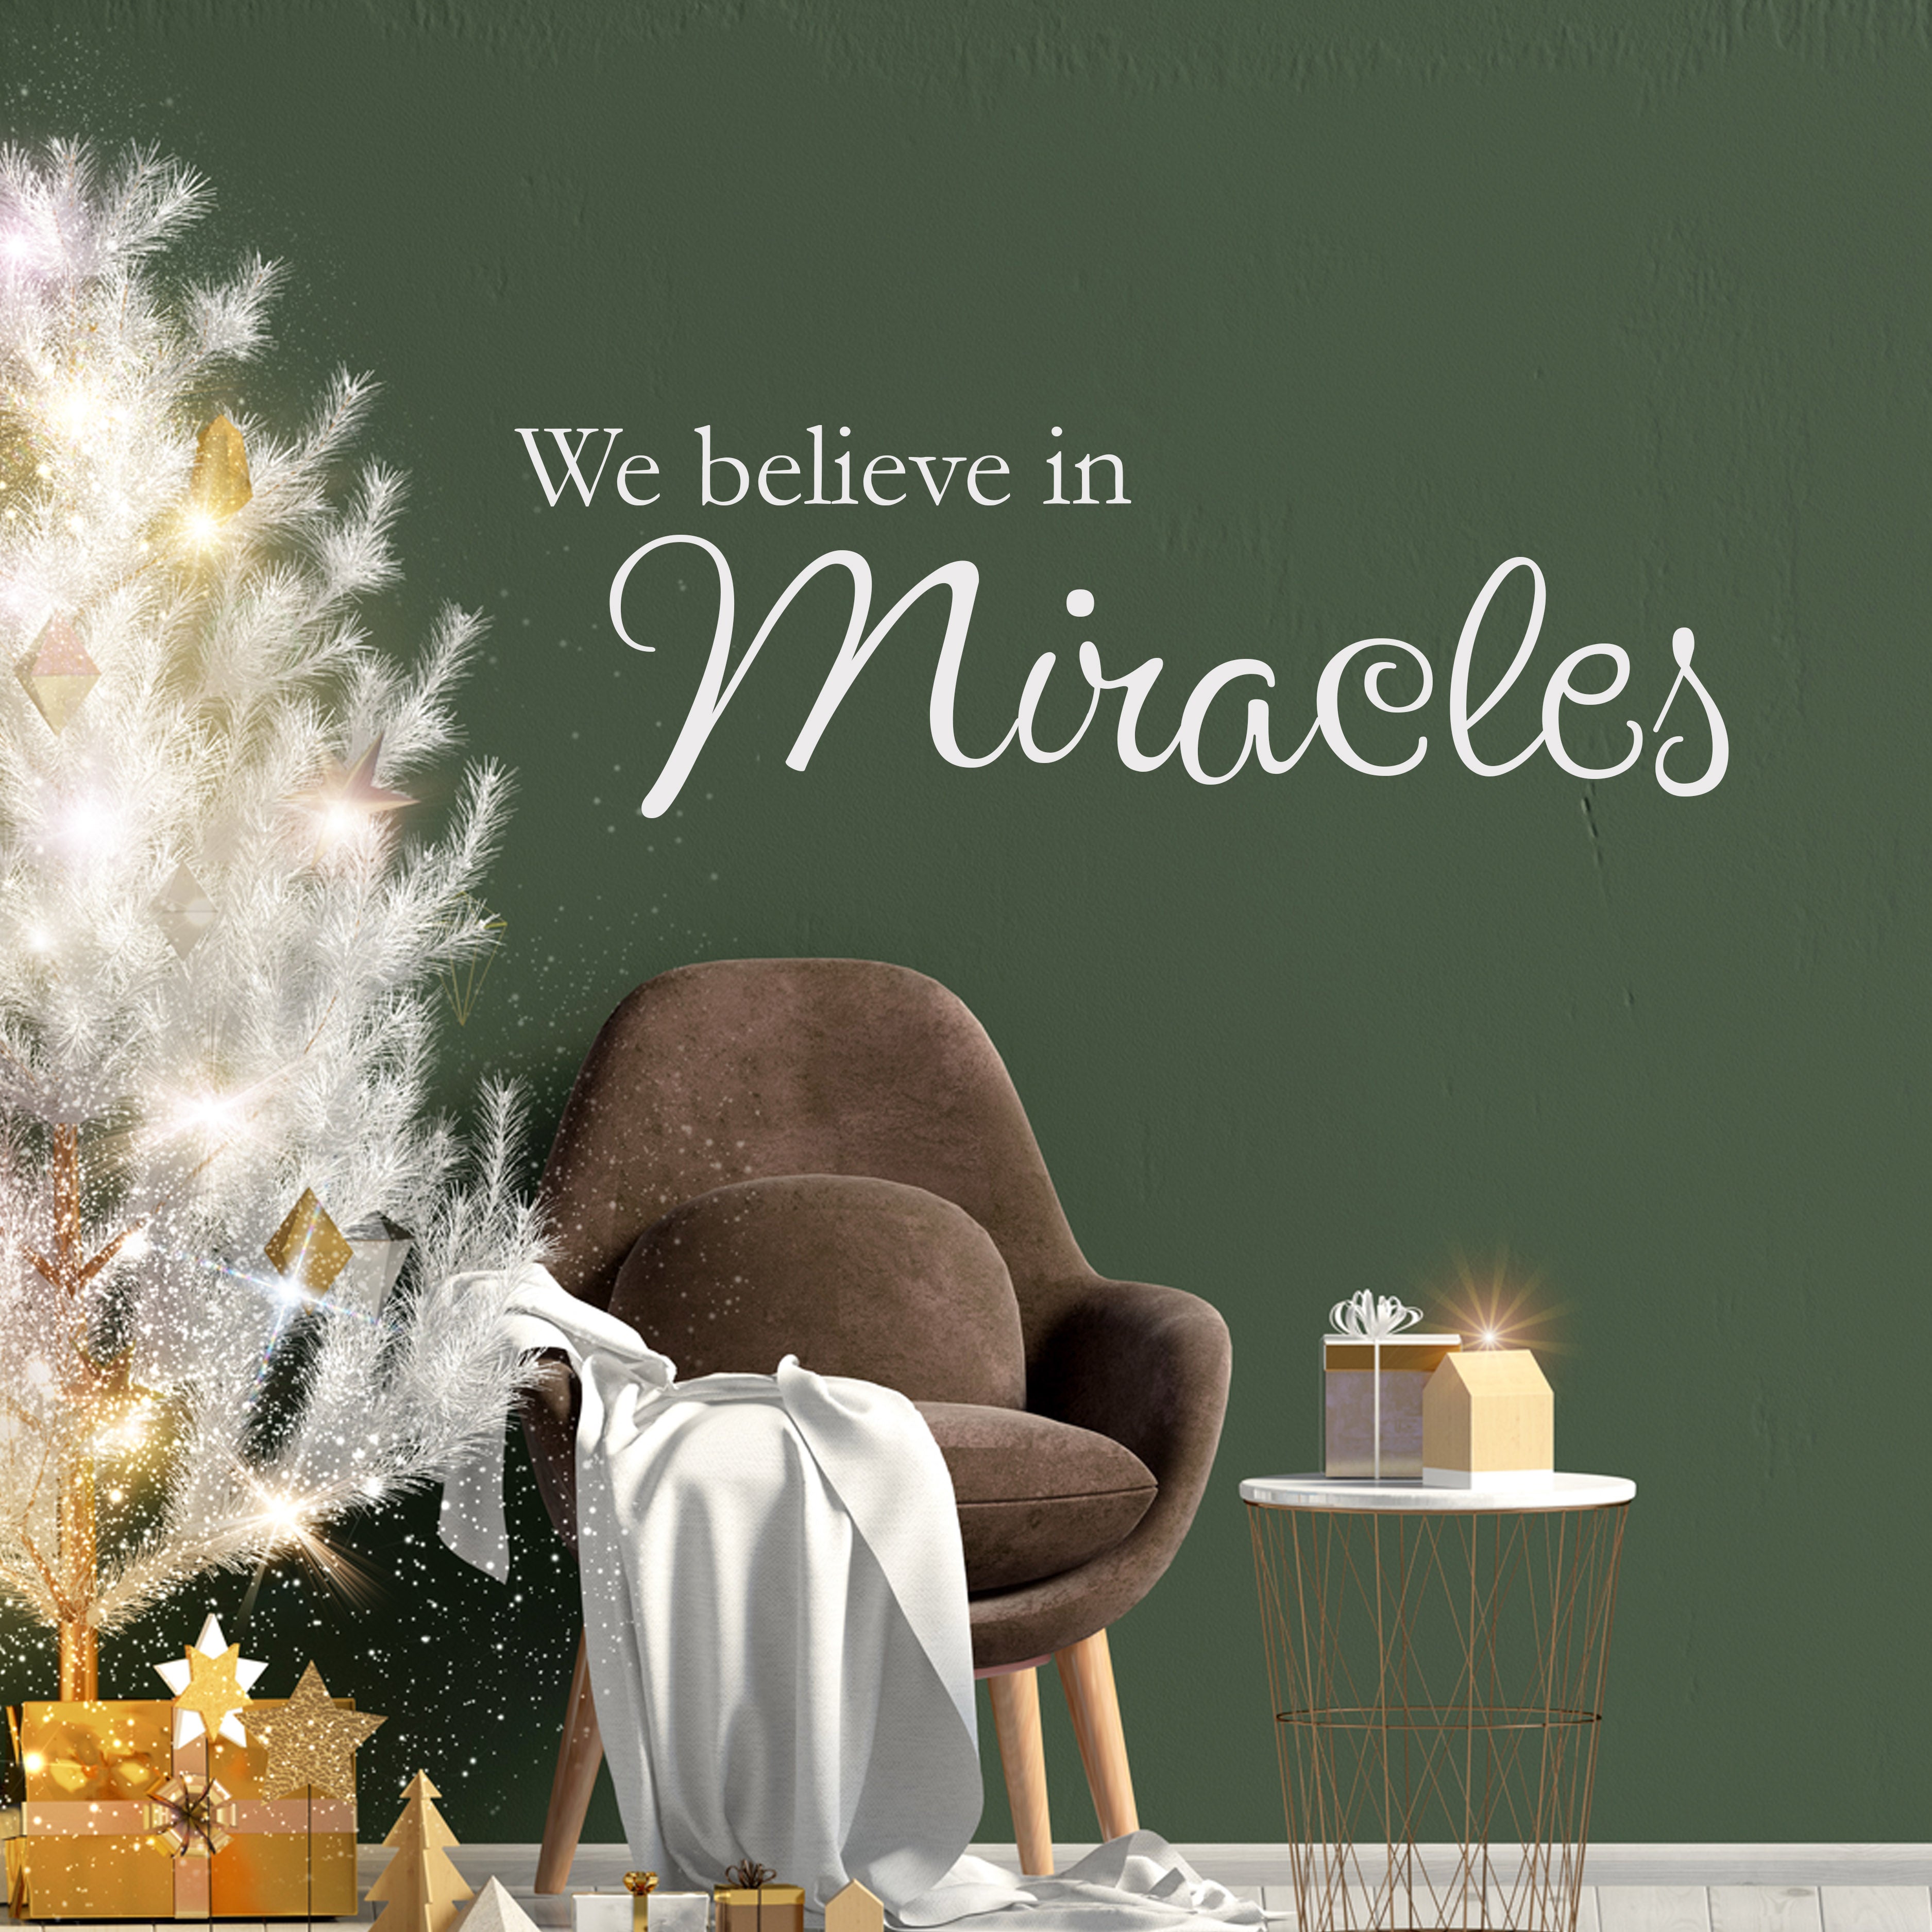 We believe in Miracles